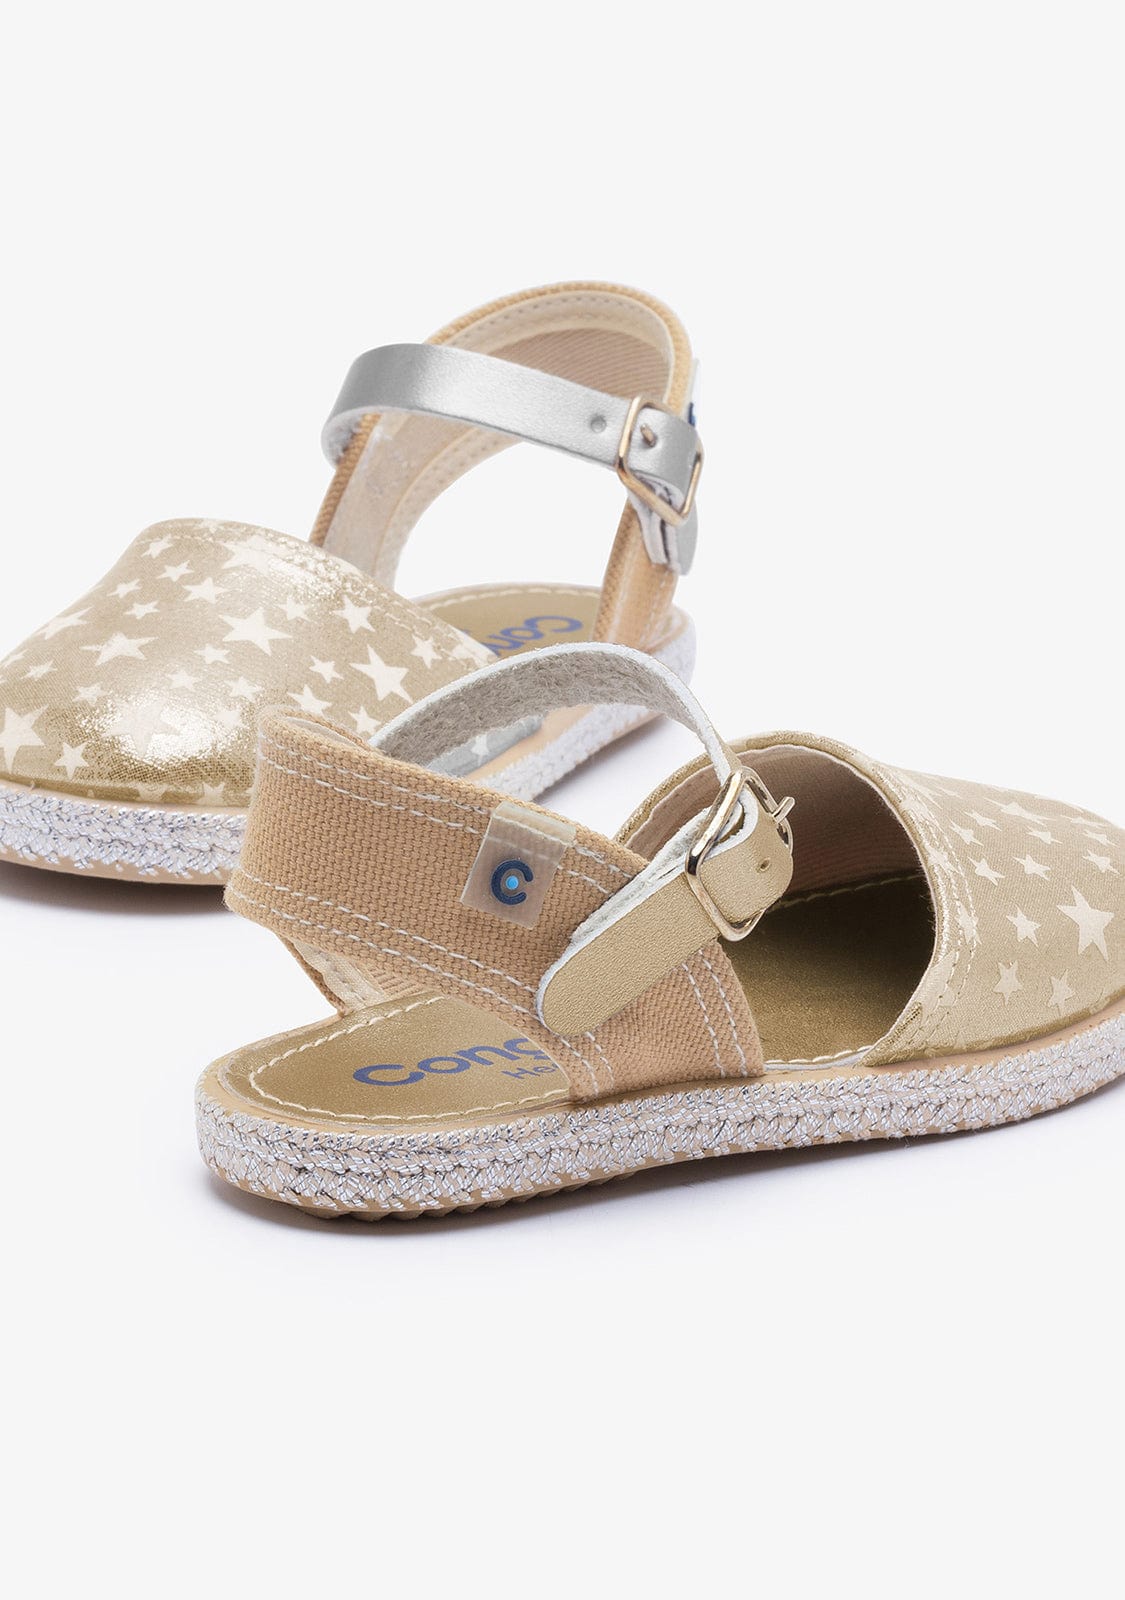 CONGUITOS Shoes Girl's Star Platinum Glow Espadrilles